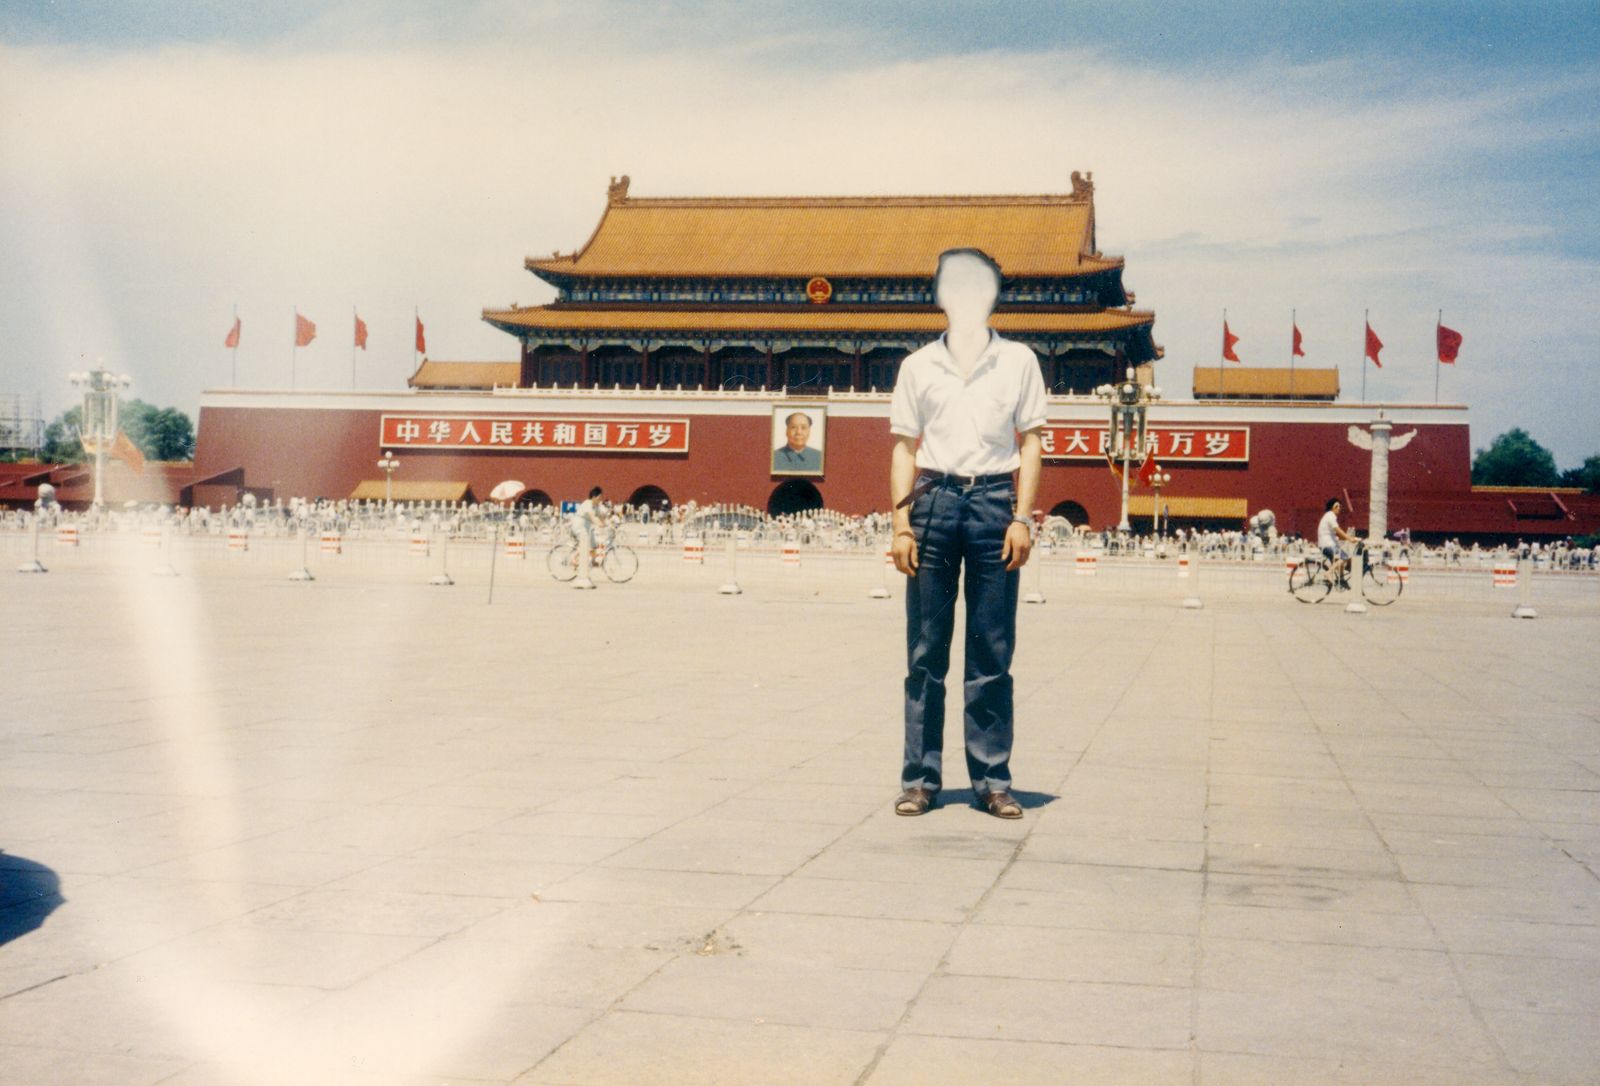 © Wanjie Li - Tiananmen Square, manipulated archival image